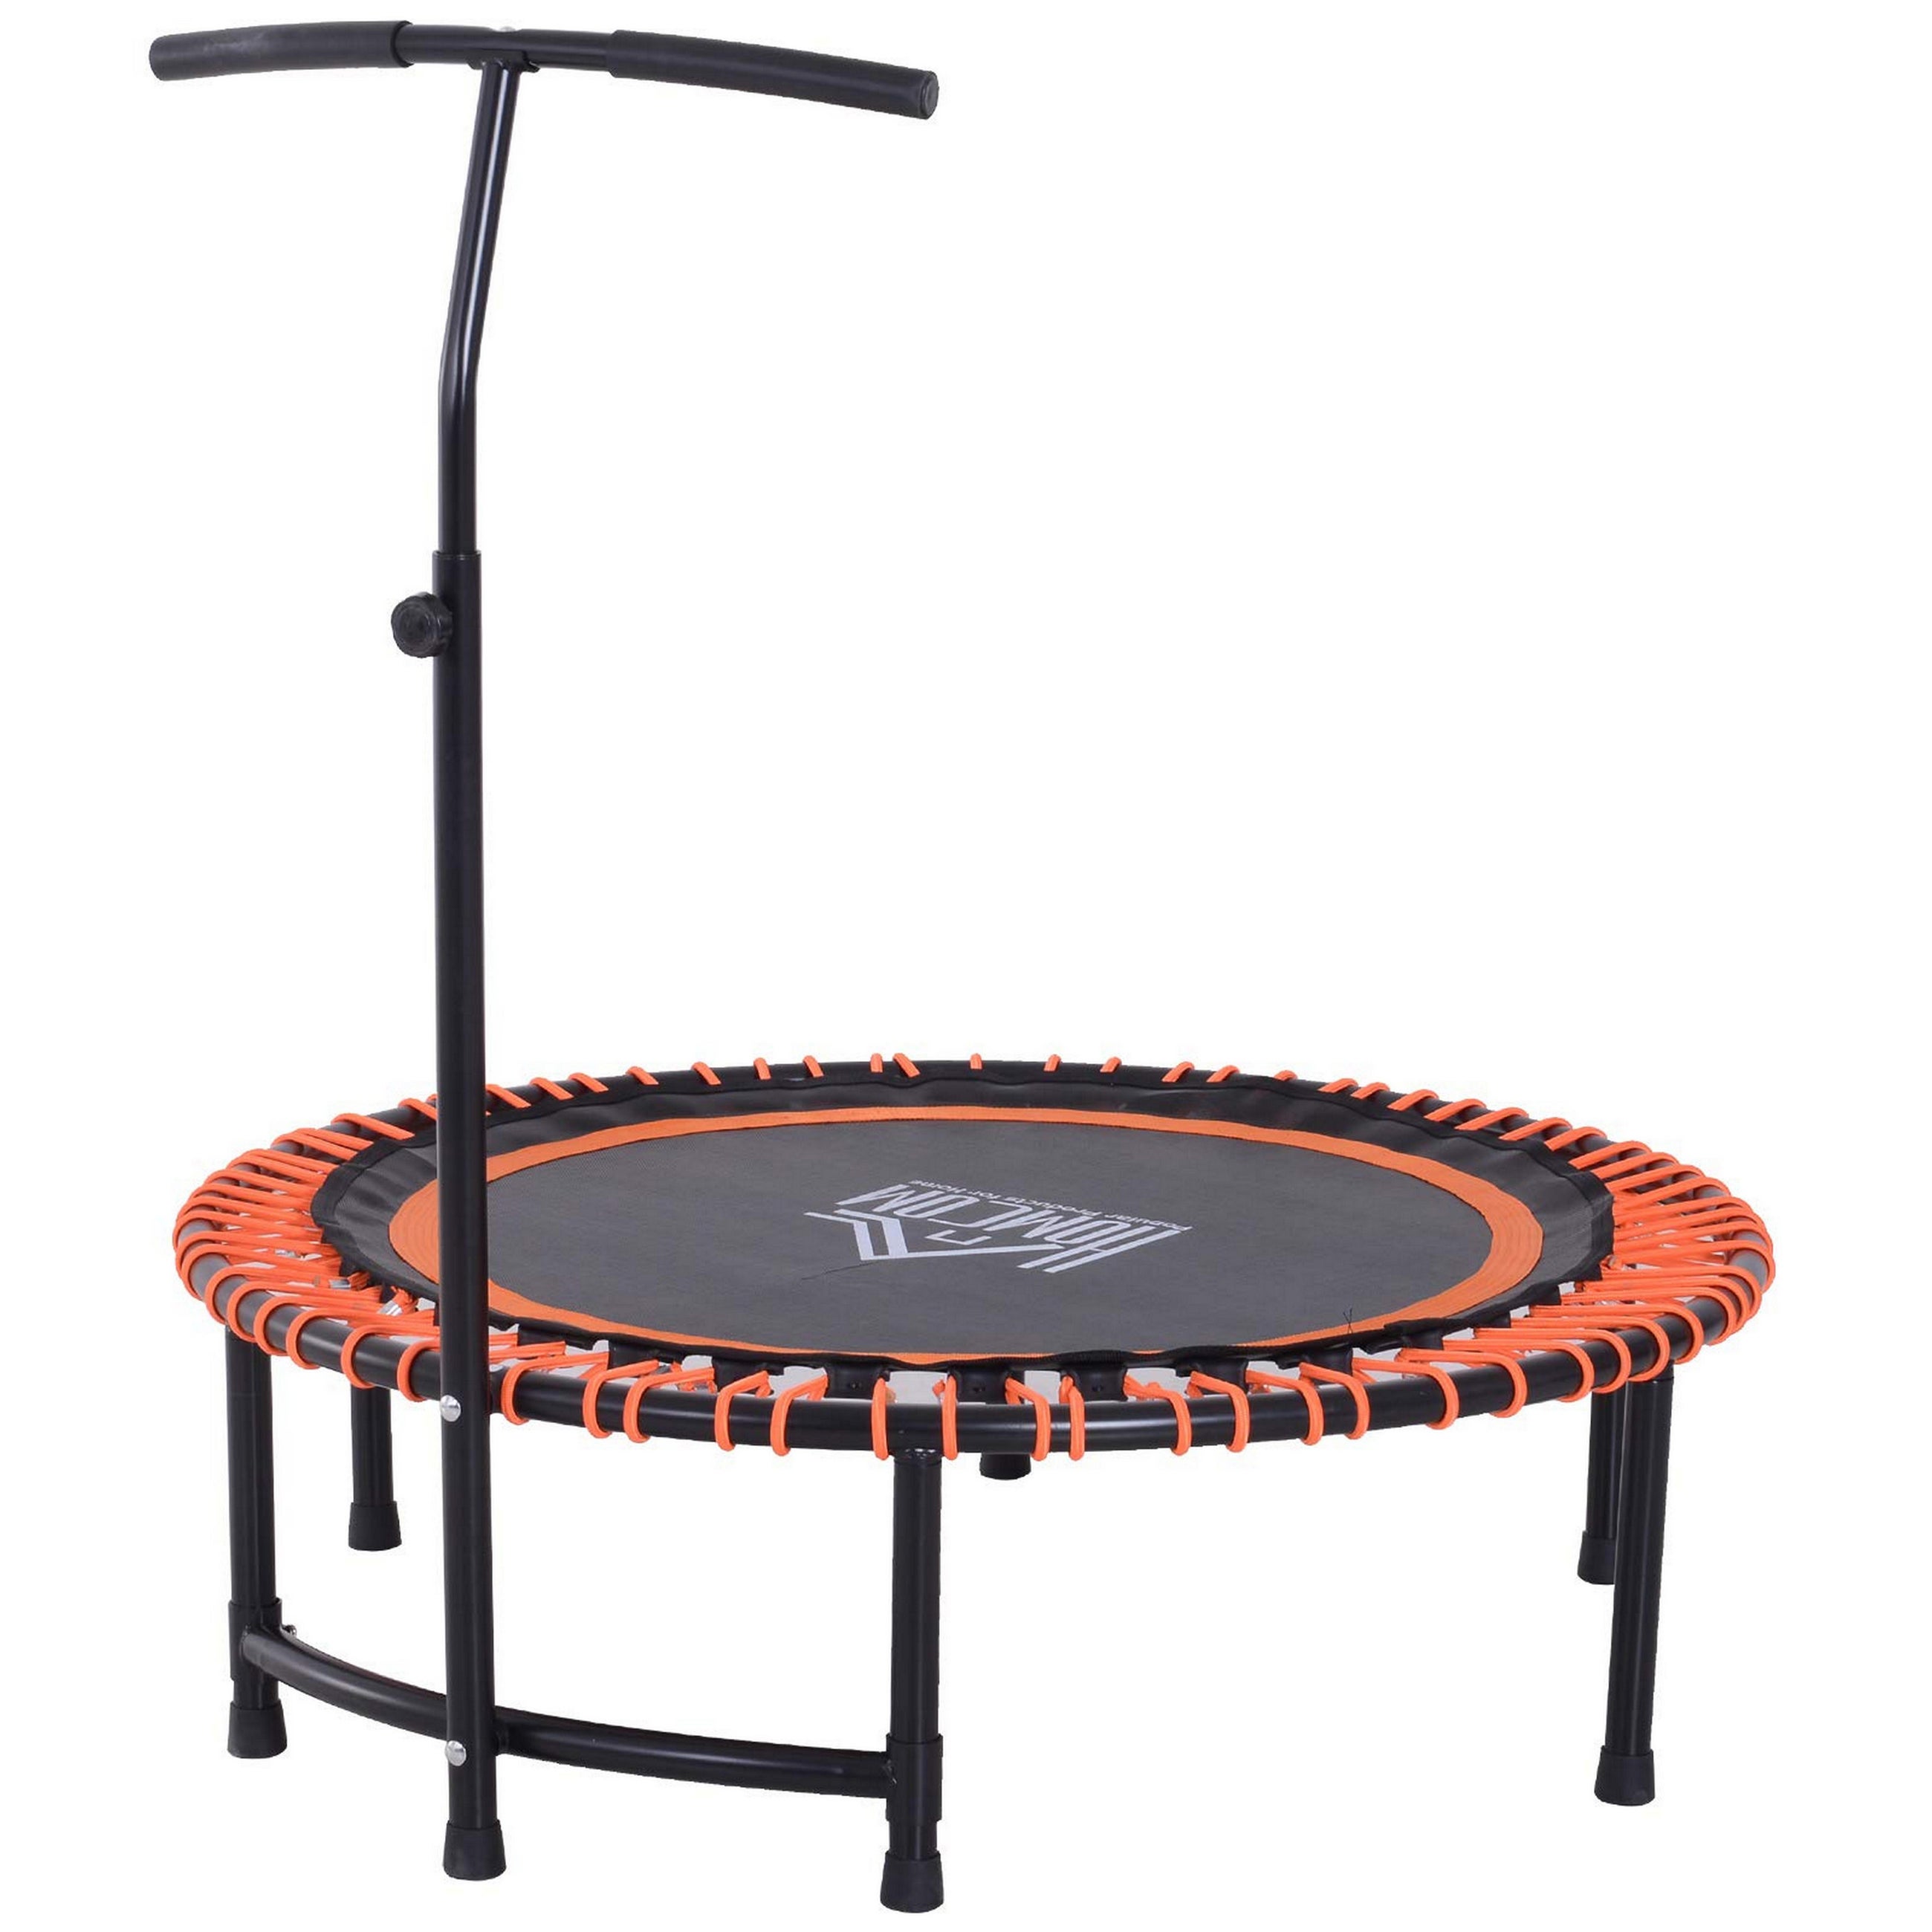 exercise trampoline